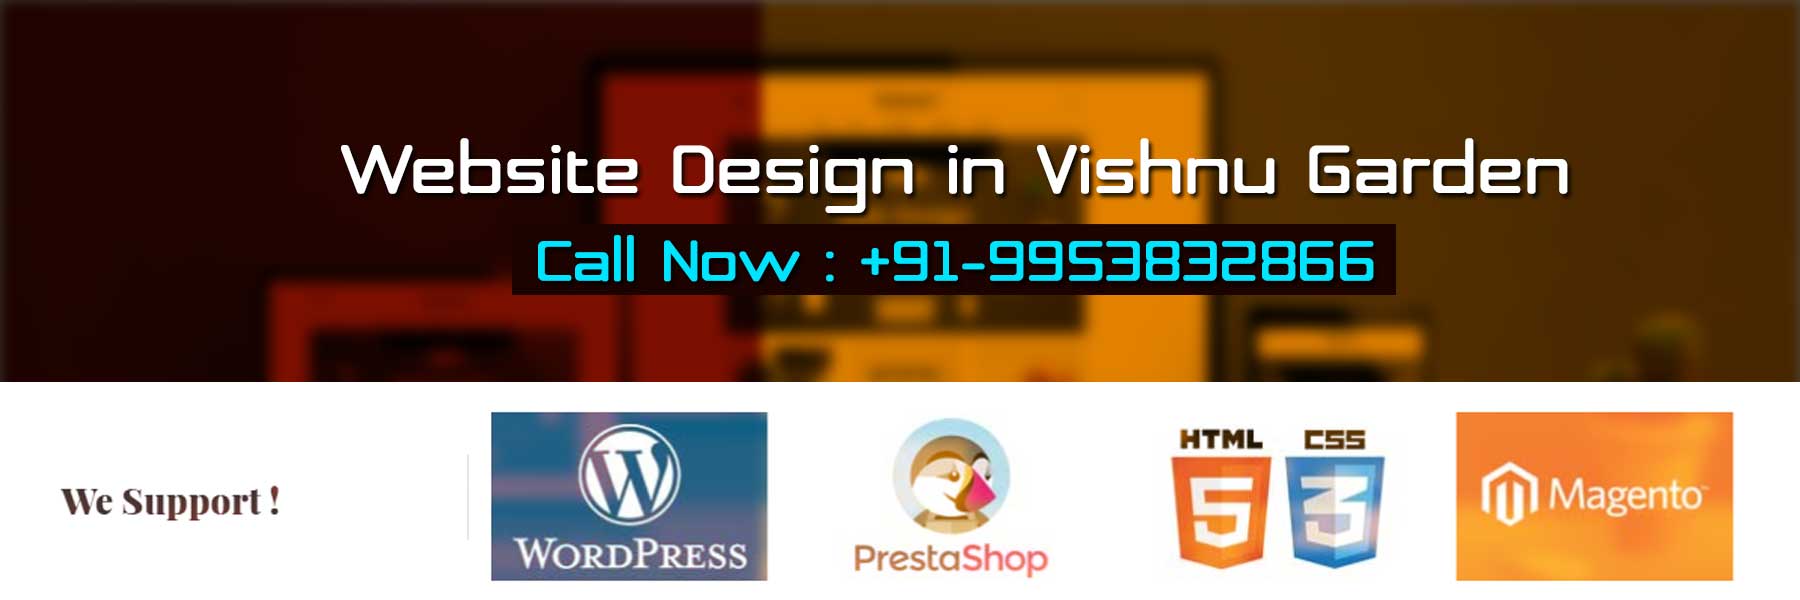 Website Design in Vishnu Garden